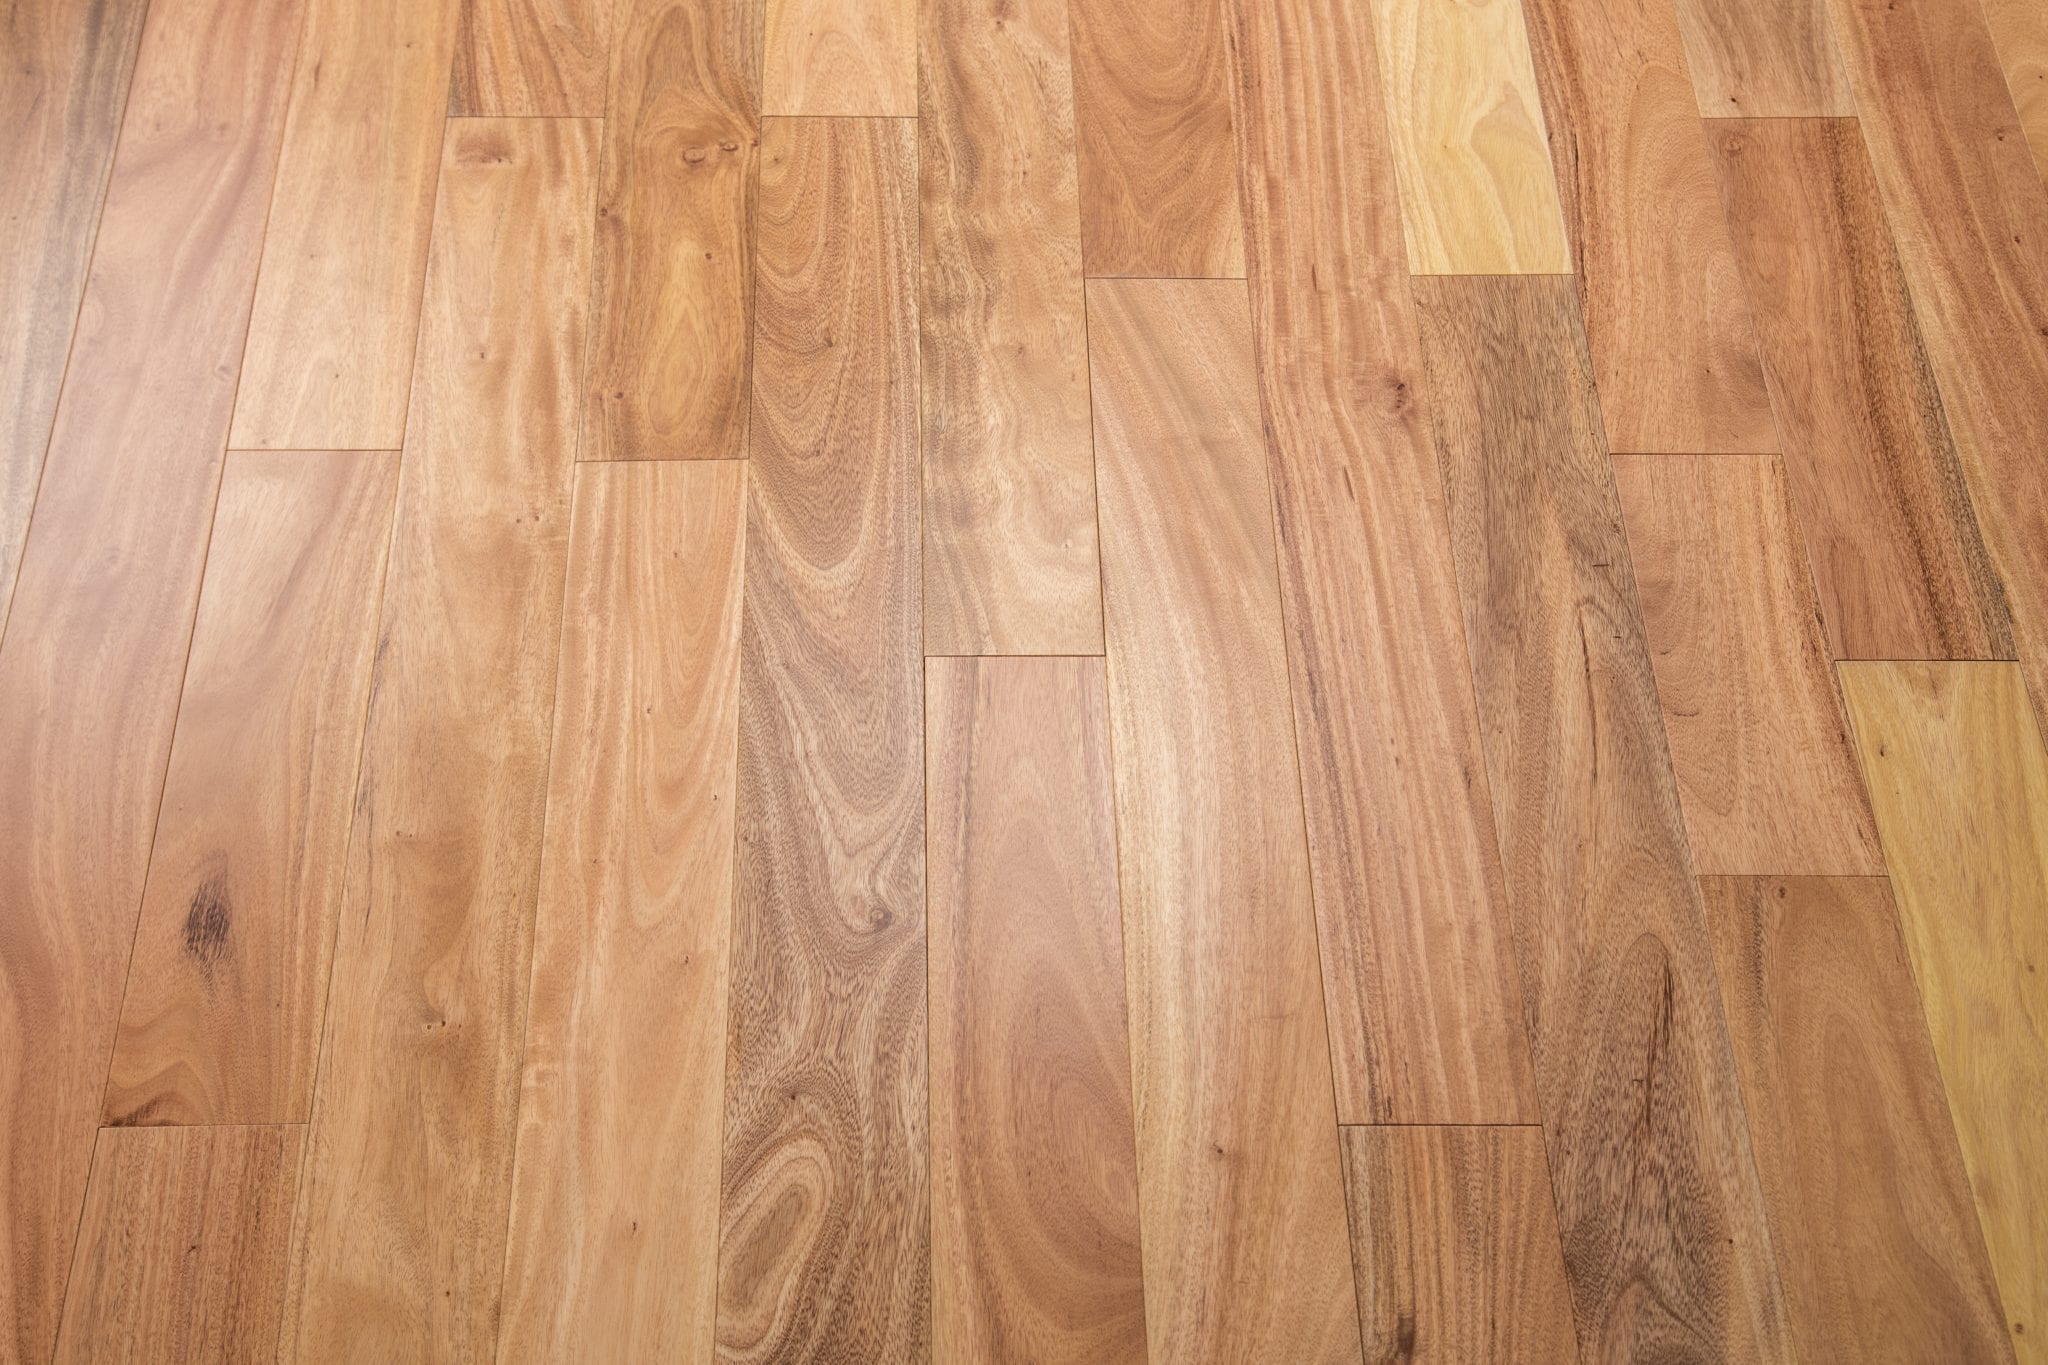 Solid Hardwood Flooring, Amendoim Hardwood Flooring Reviews